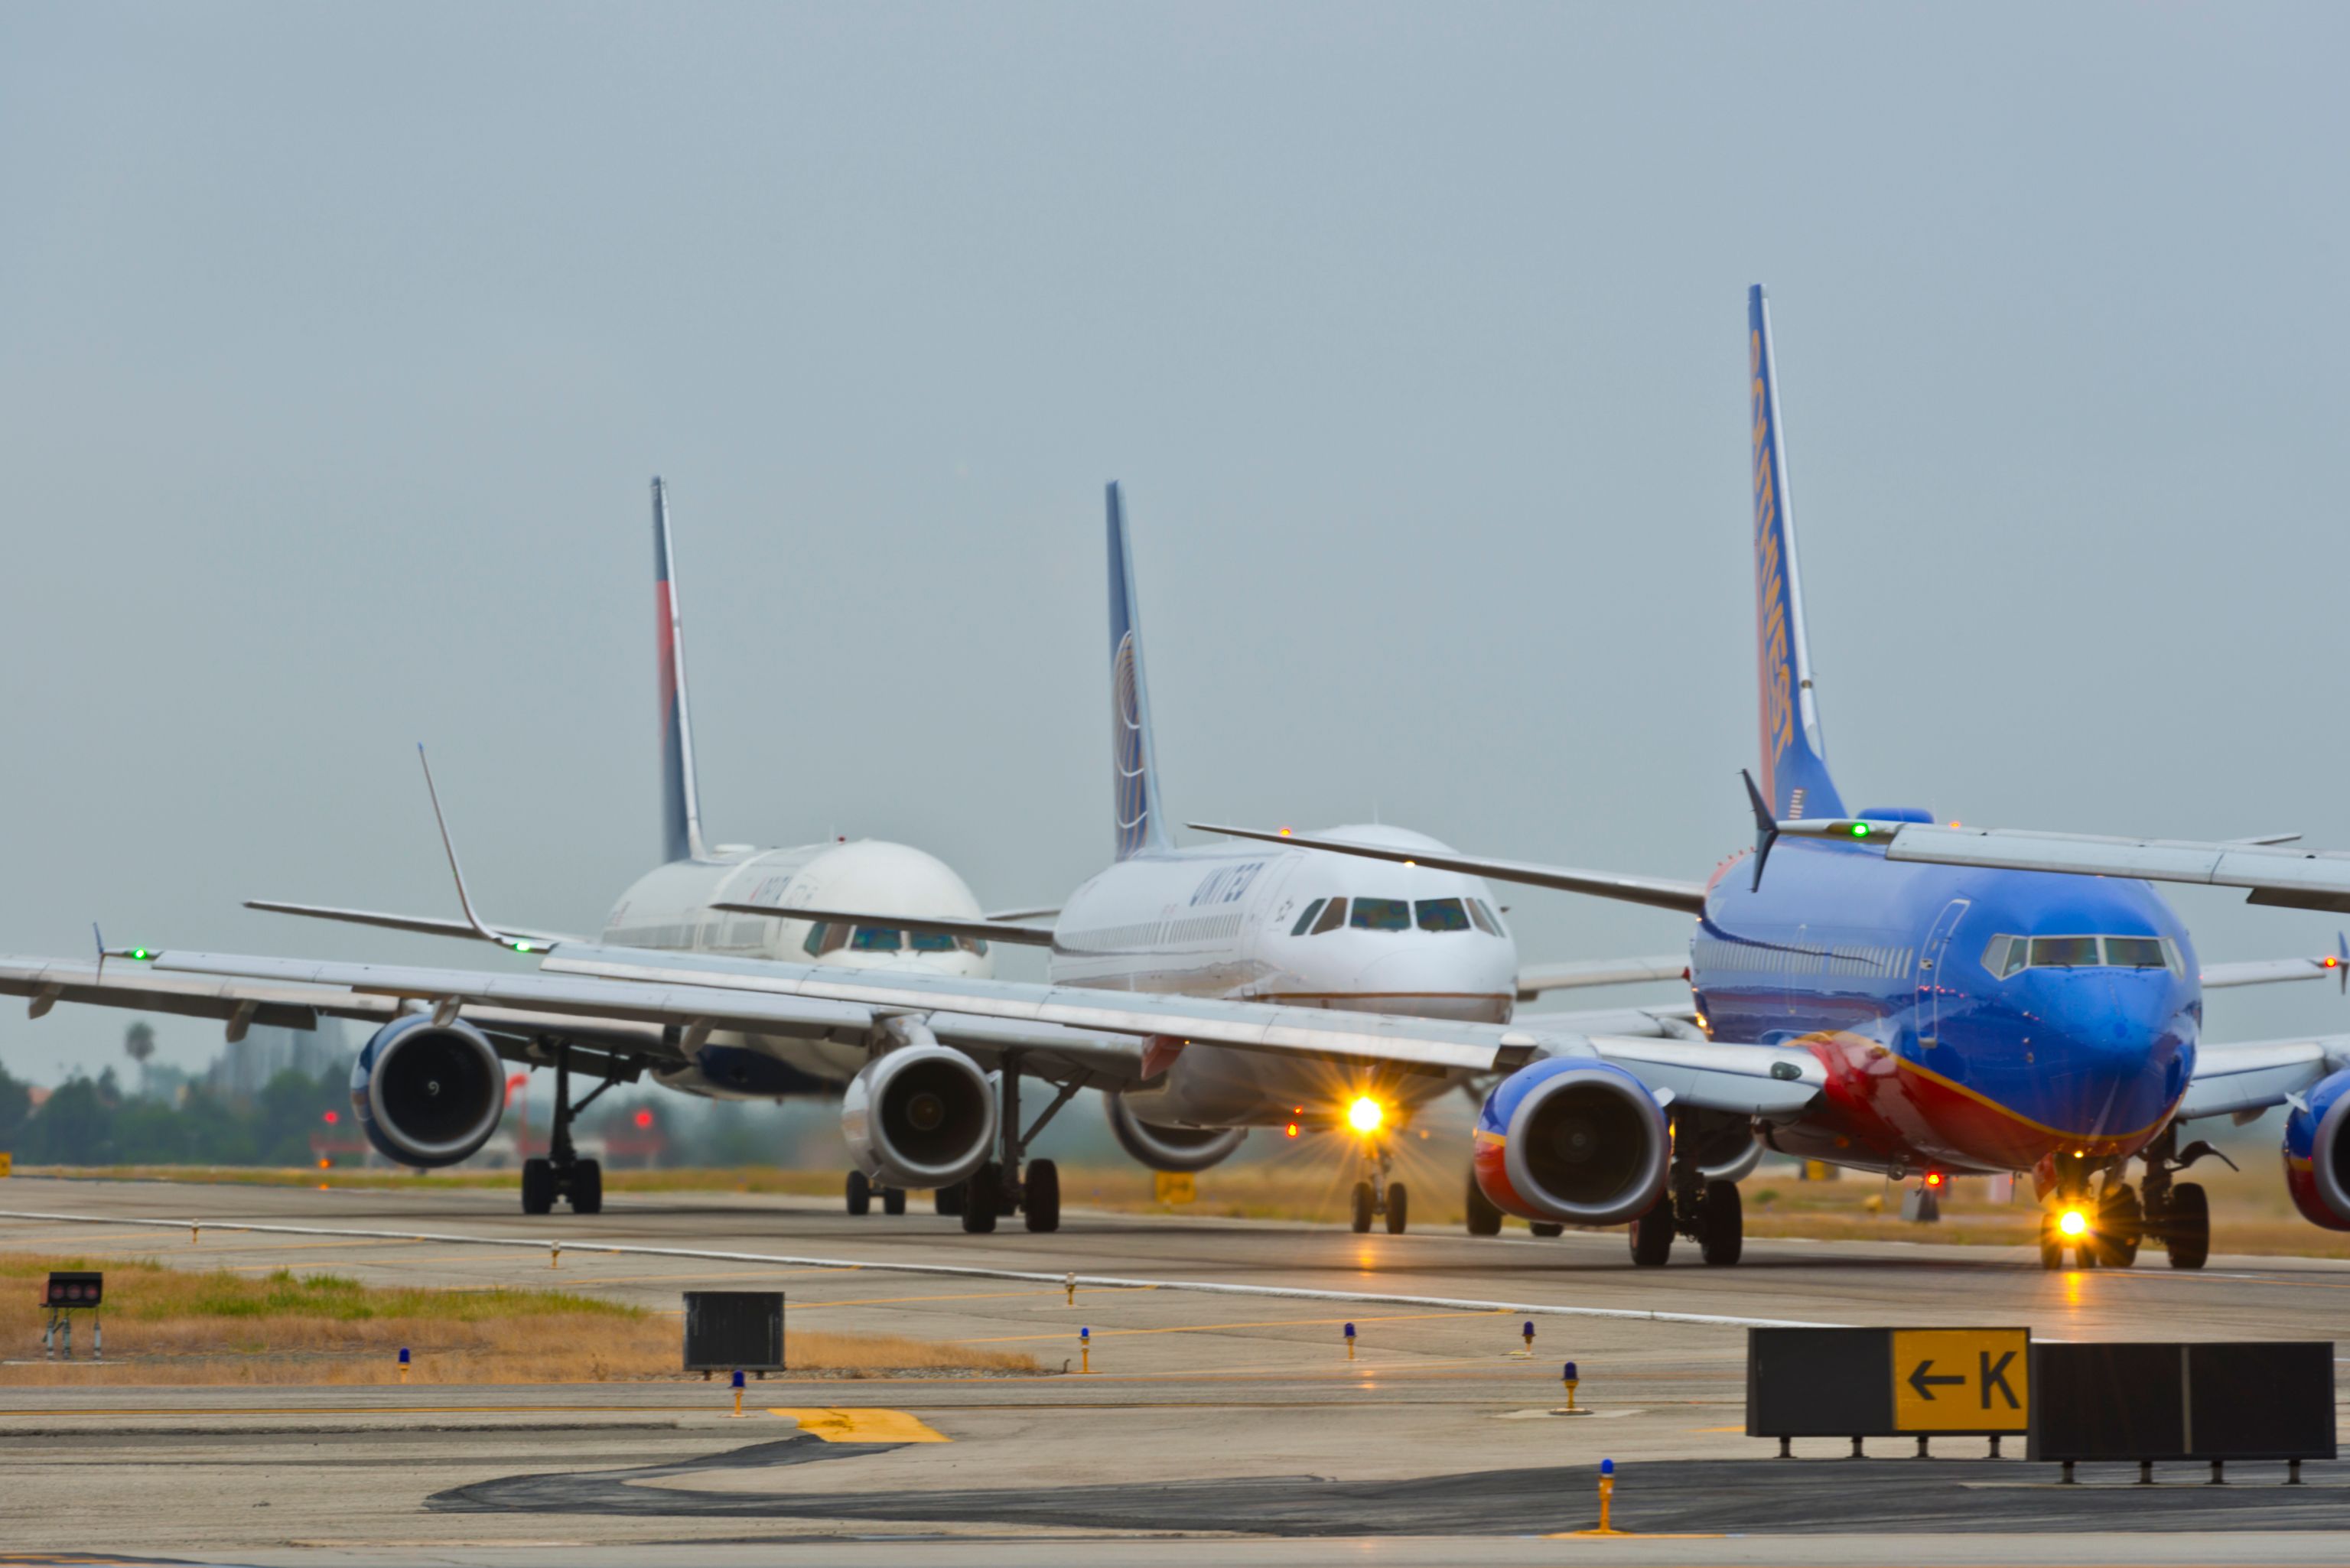 Aircraft lined up for departure at John Wayne Airport.